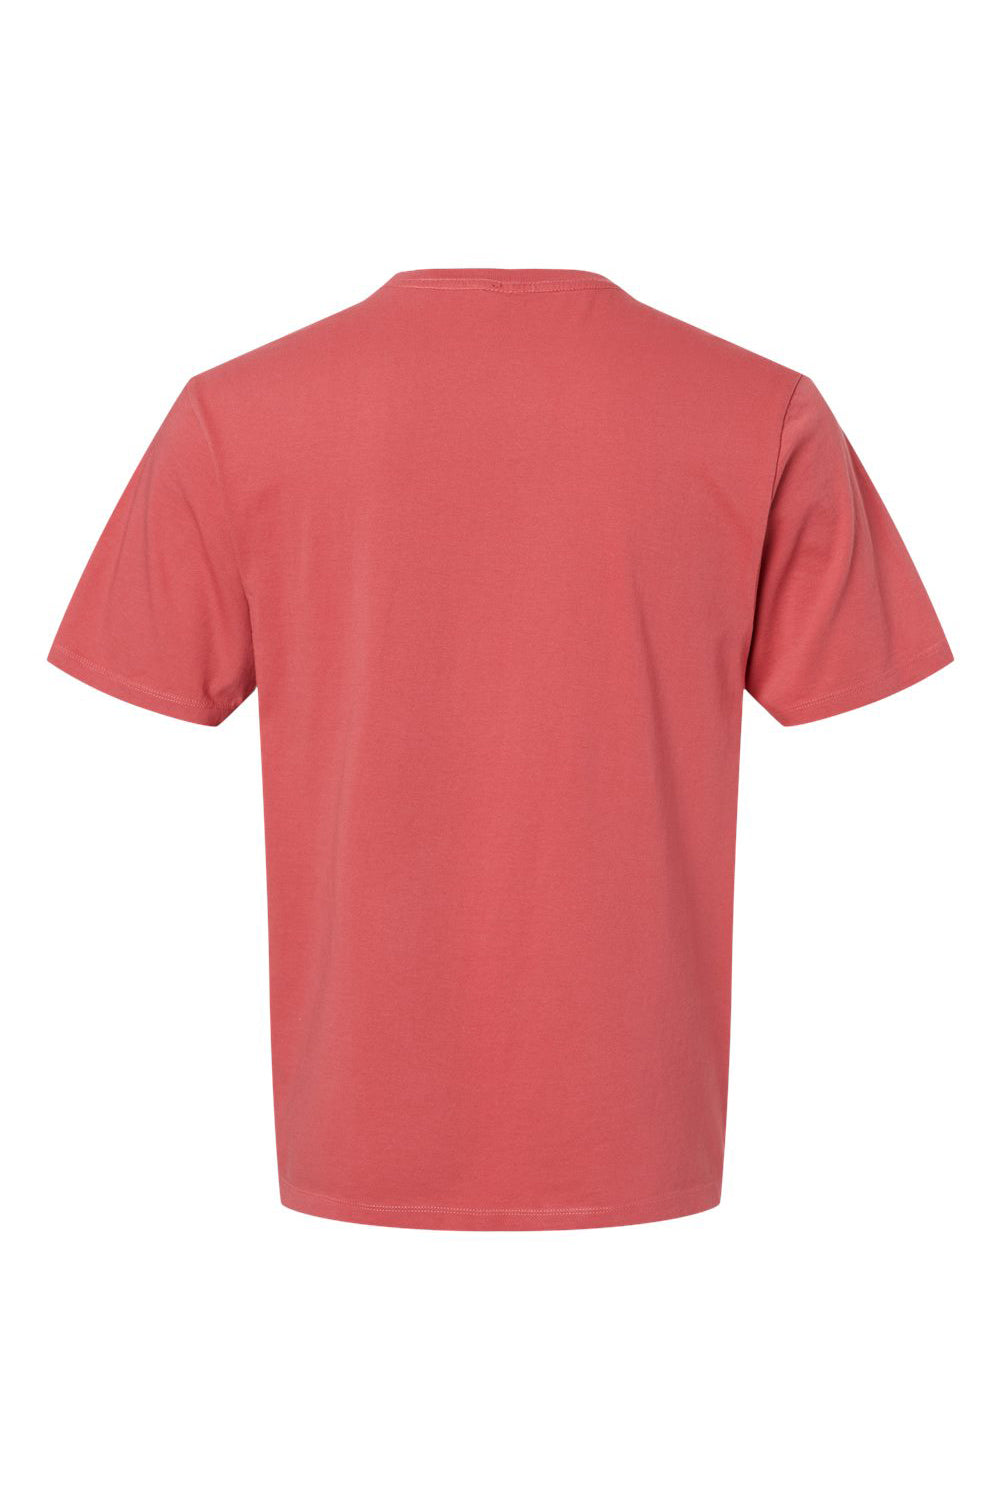 SoftShirts 400 Mens Organic Short Sleeve Crewneck T-Shirt Brick Flat Back